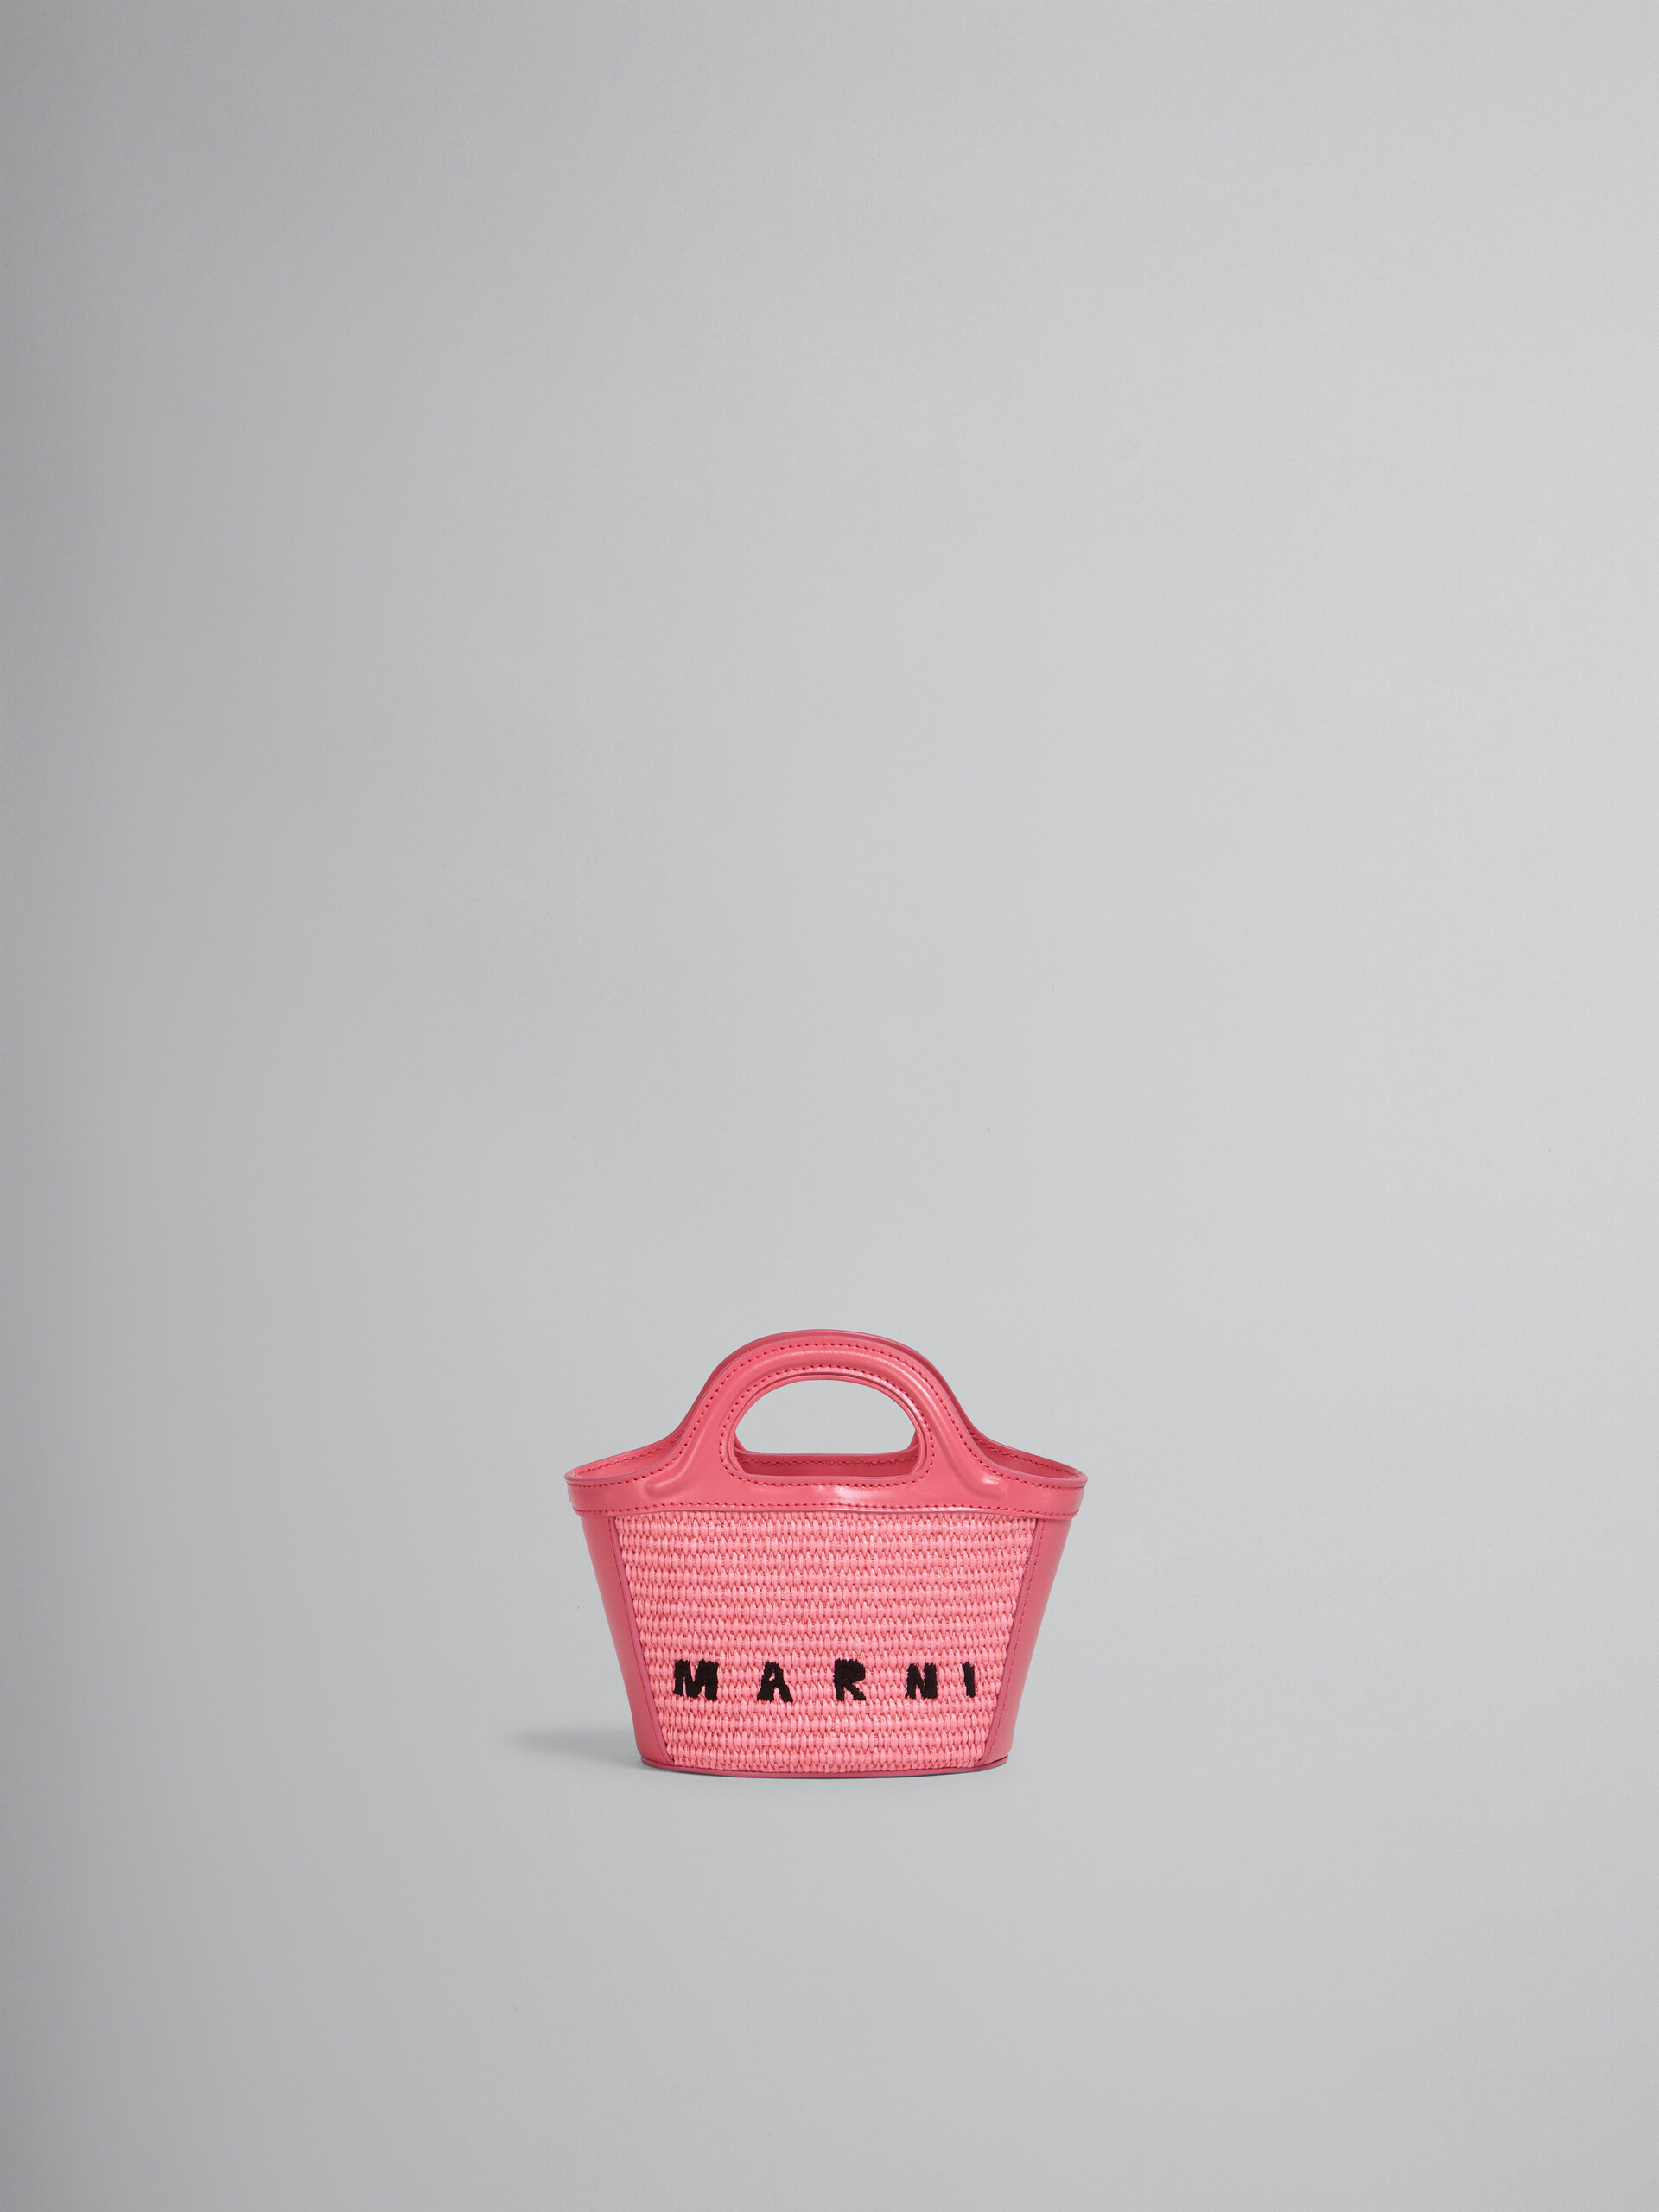 TROPICALIA micro bag in pink leather and raffia - Handbags - Image 1